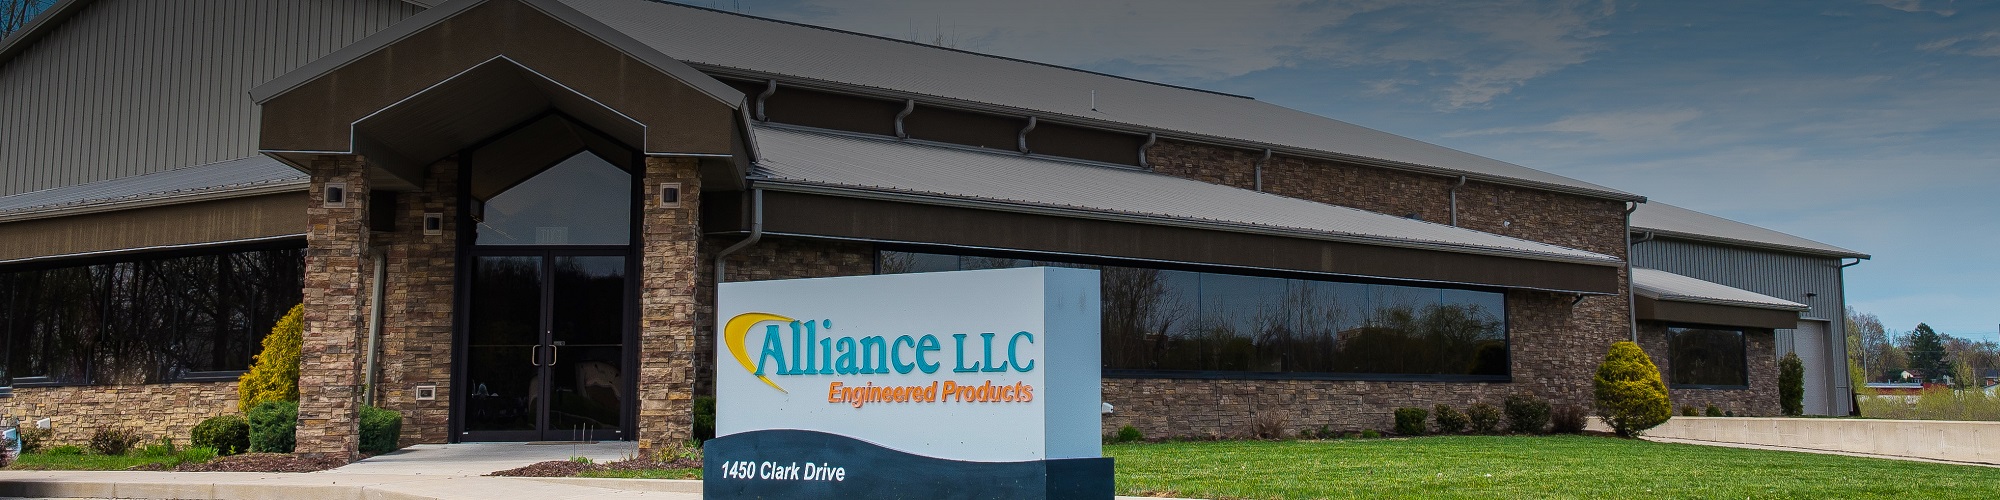 Alliance LLC Headquarters